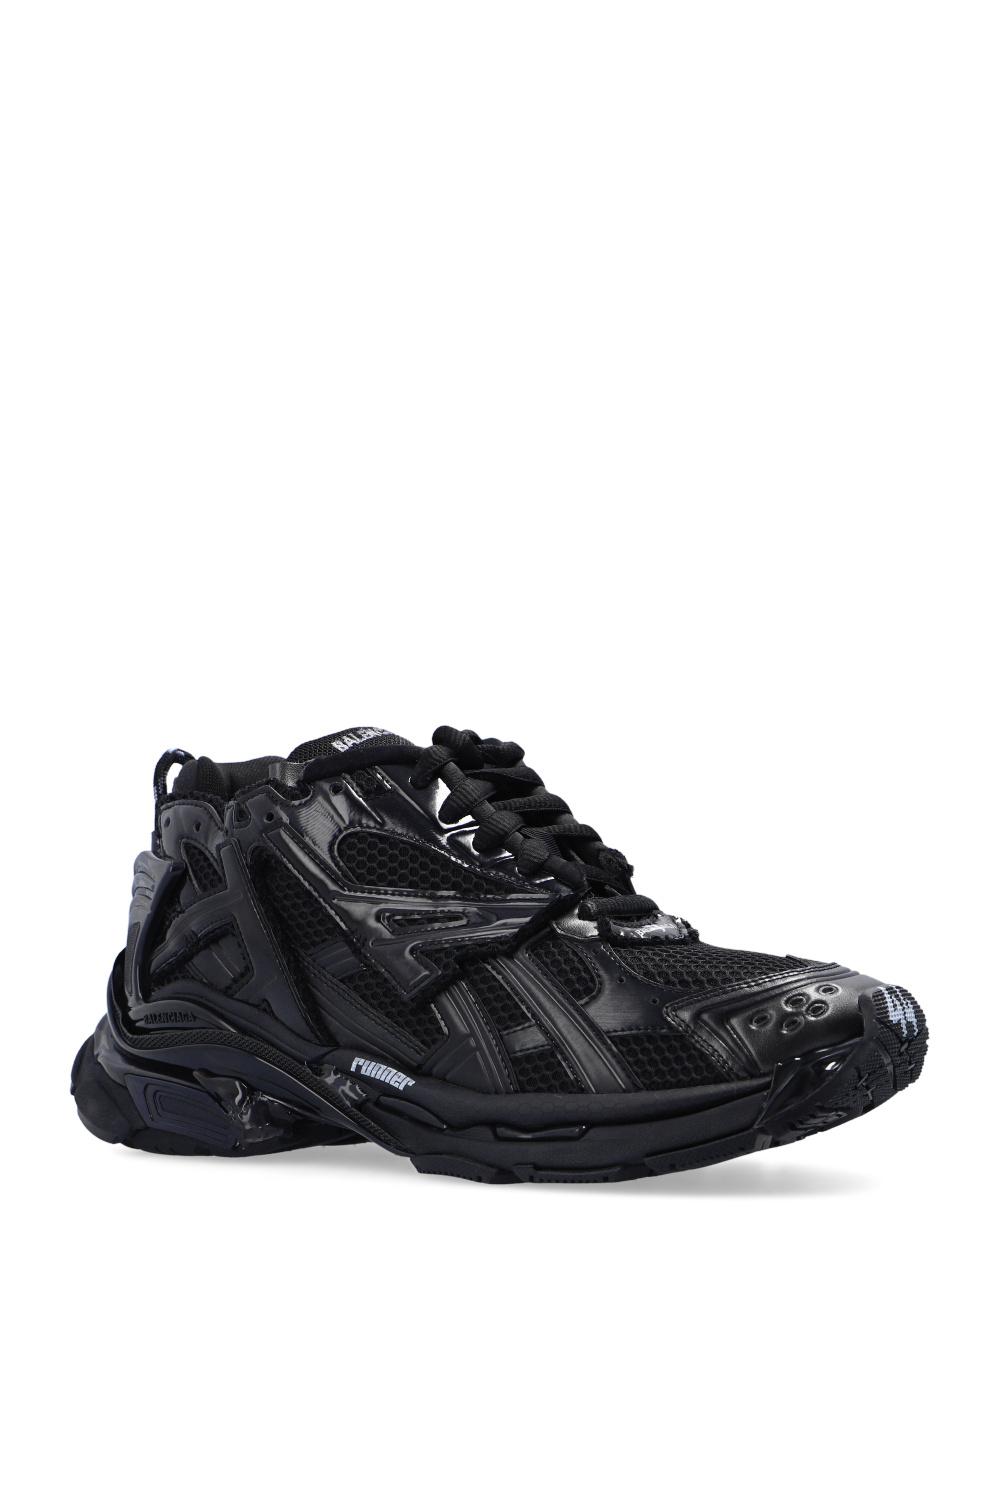 Balenciaga 'runner' Sneakers in Black for Men | Lyst